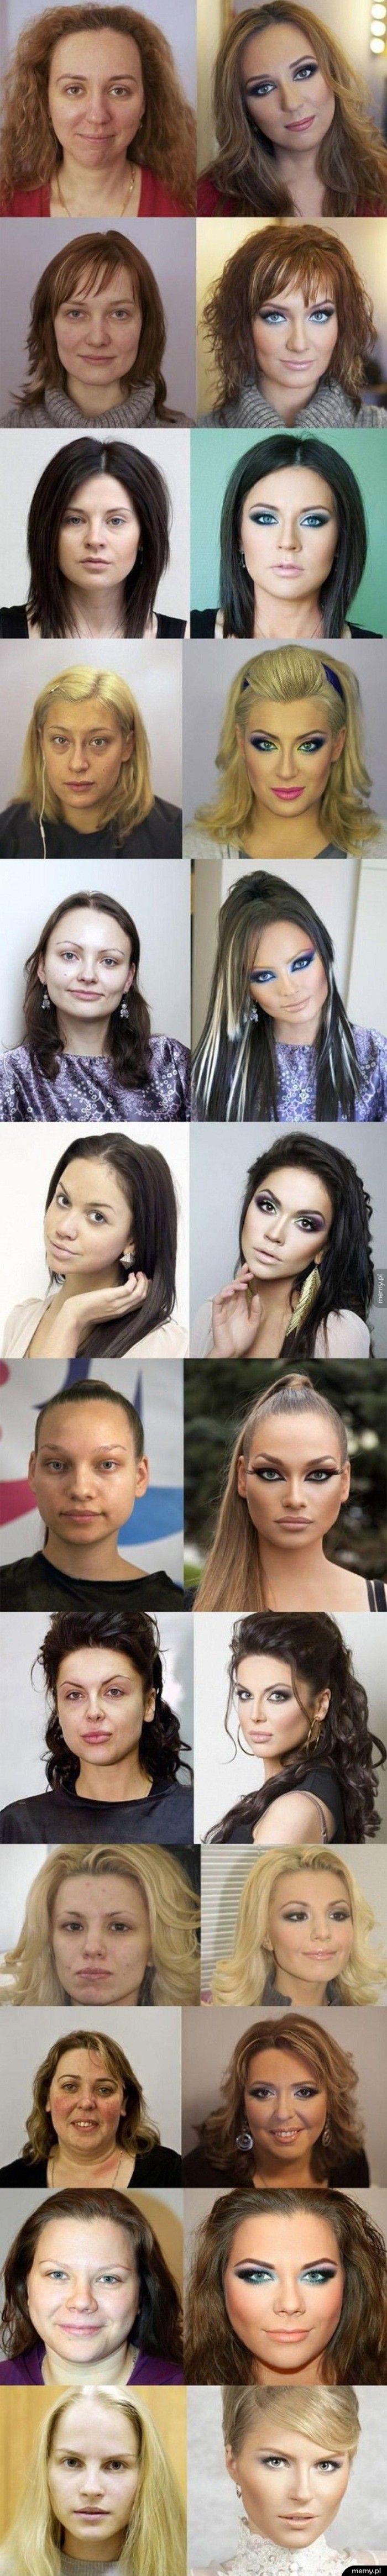 Potęga makijażu